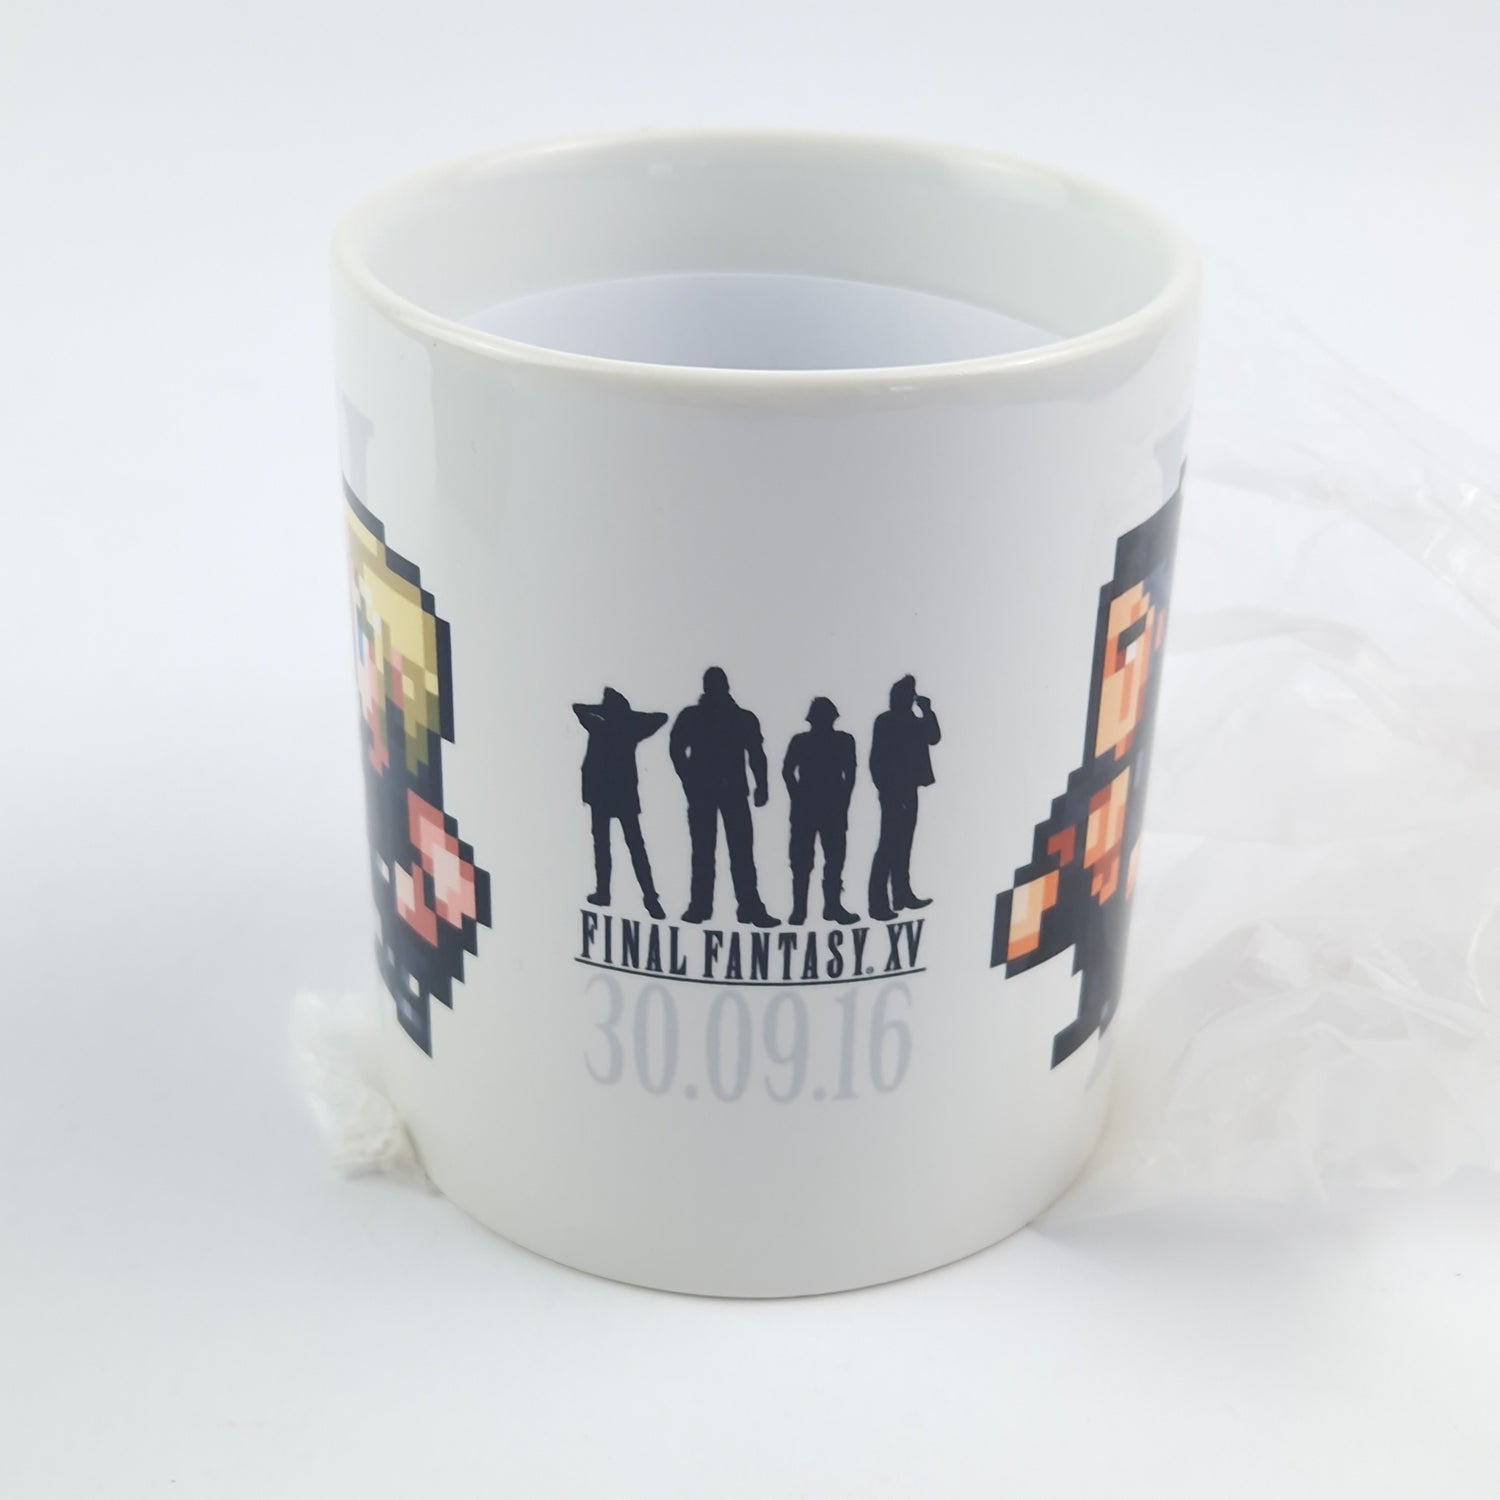 Final Fantasy XV 30.09.16 Square Enix Promo Tasse / Cup - PROMO Not for Sale